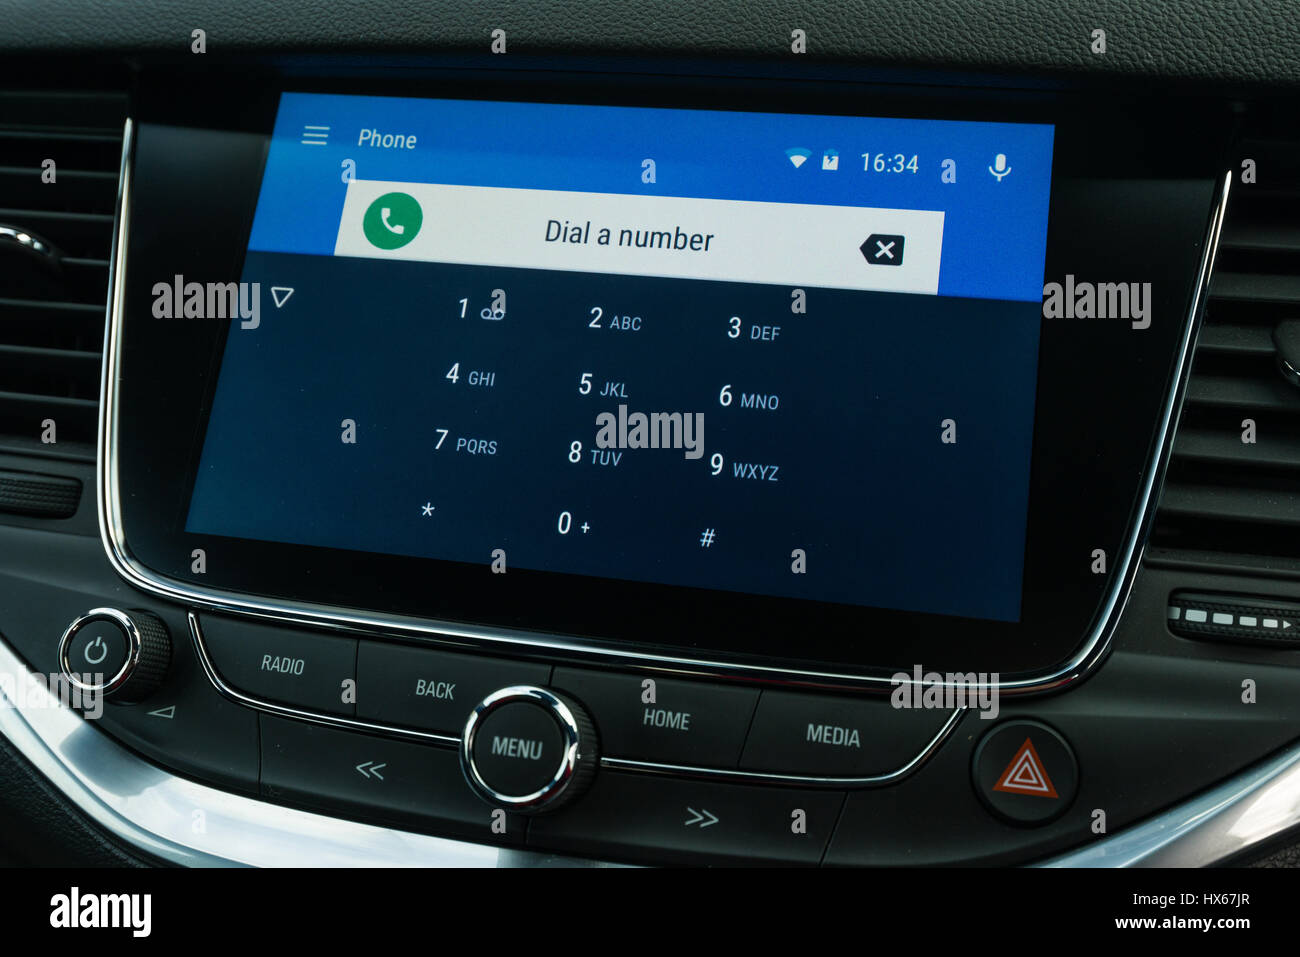 Android auto -Fotos und -Bildmaterial in hoher Auflösung – Alamy